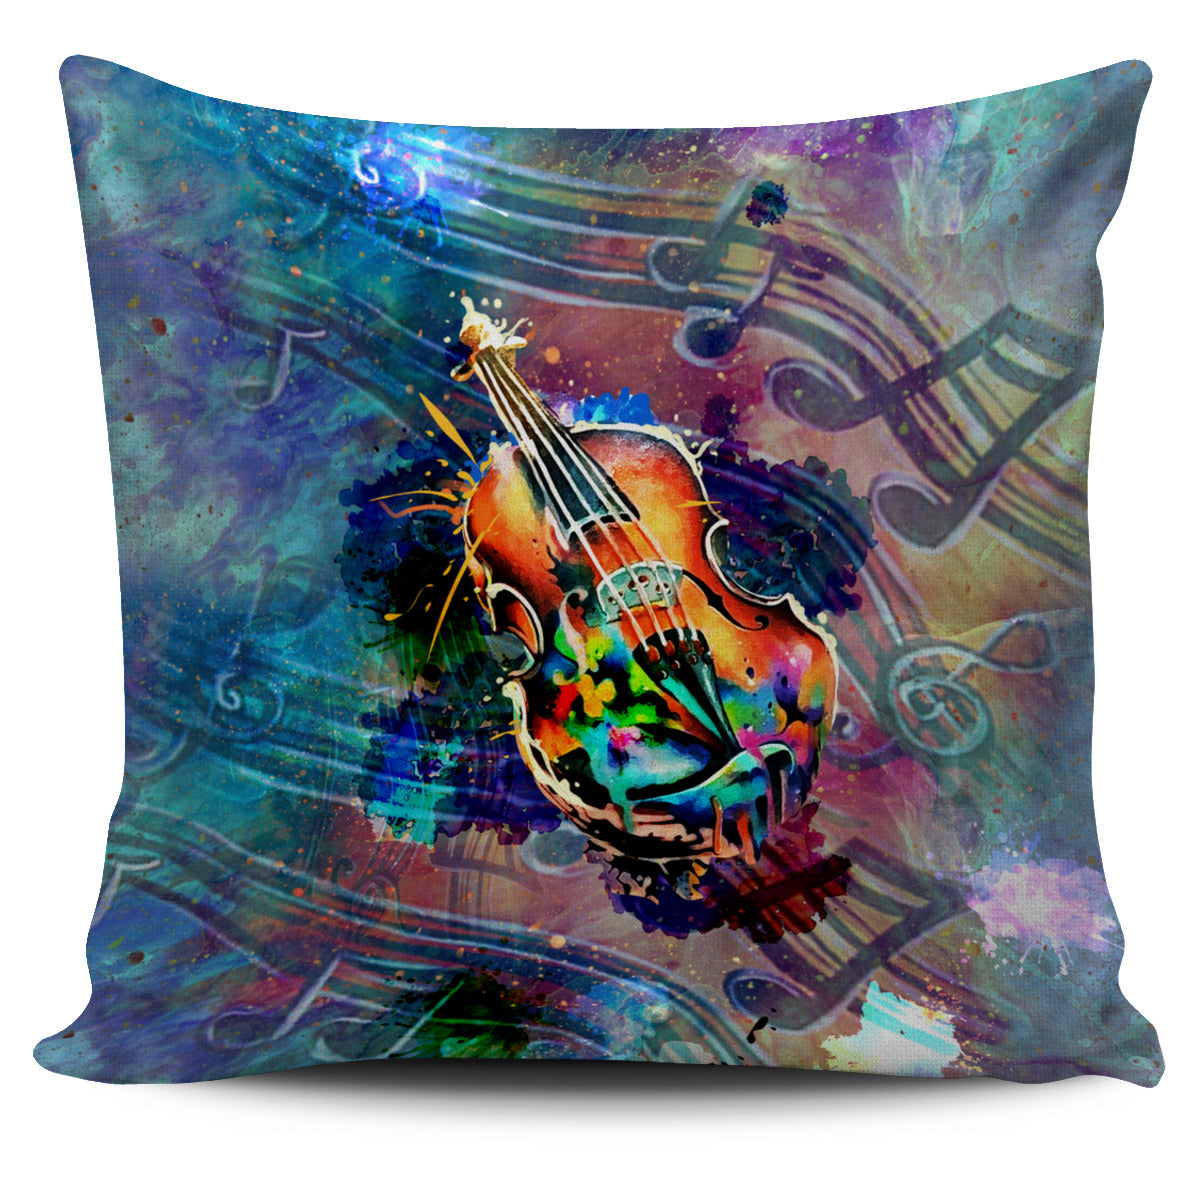 Artistic Violin Pillow Cover